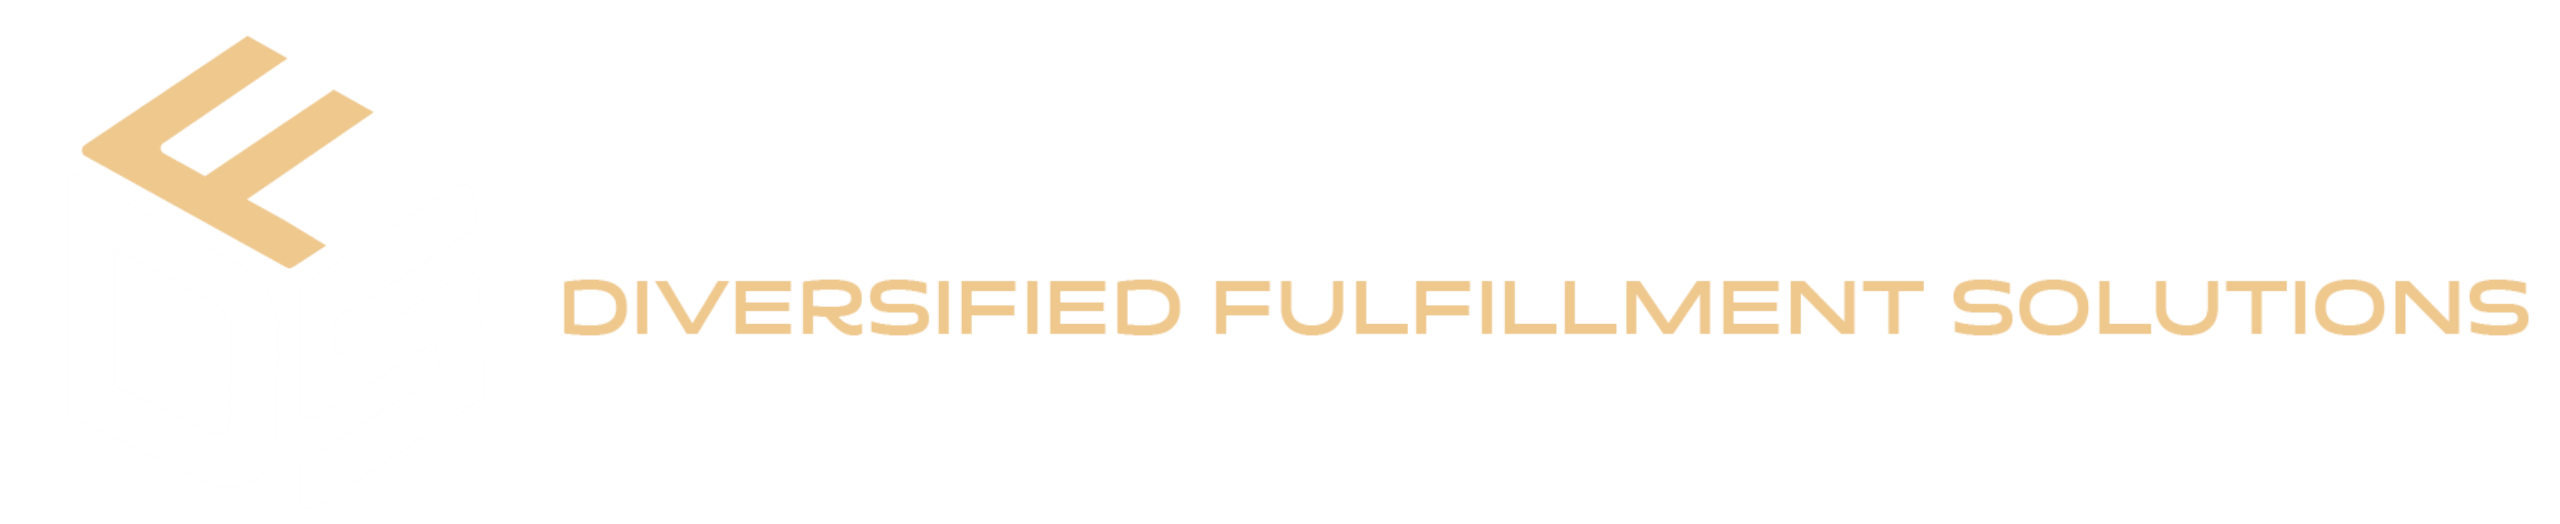 Diversified Fulfillment Solutions Logo